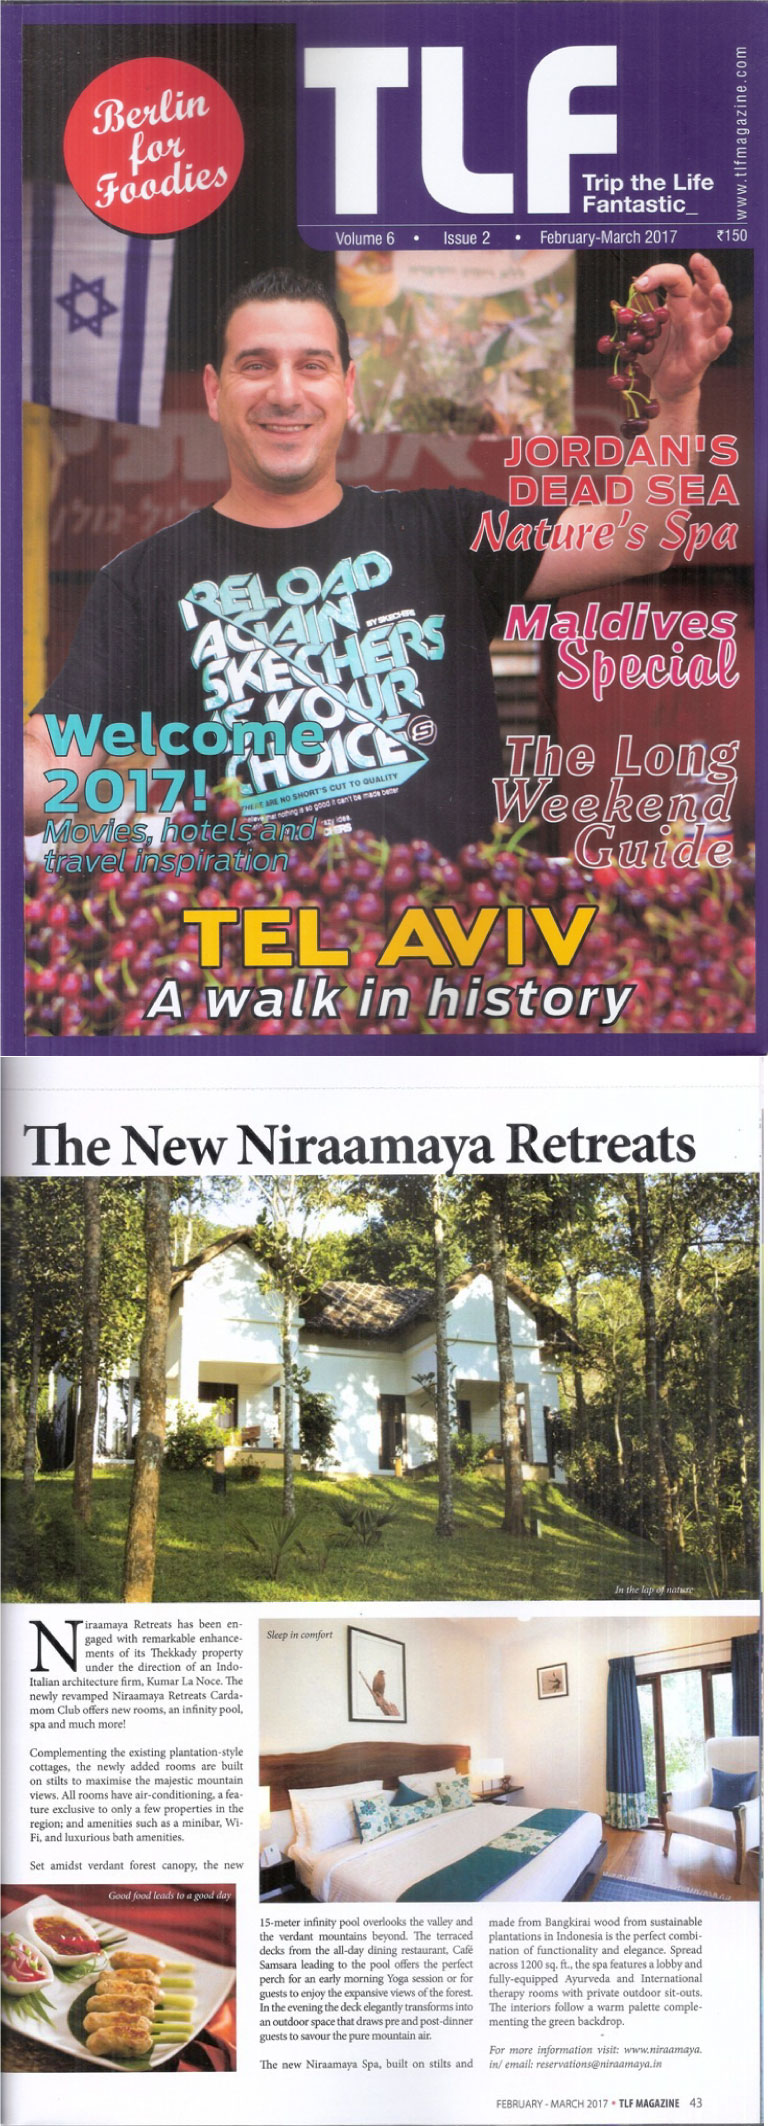 The New Niraamaya Retreats